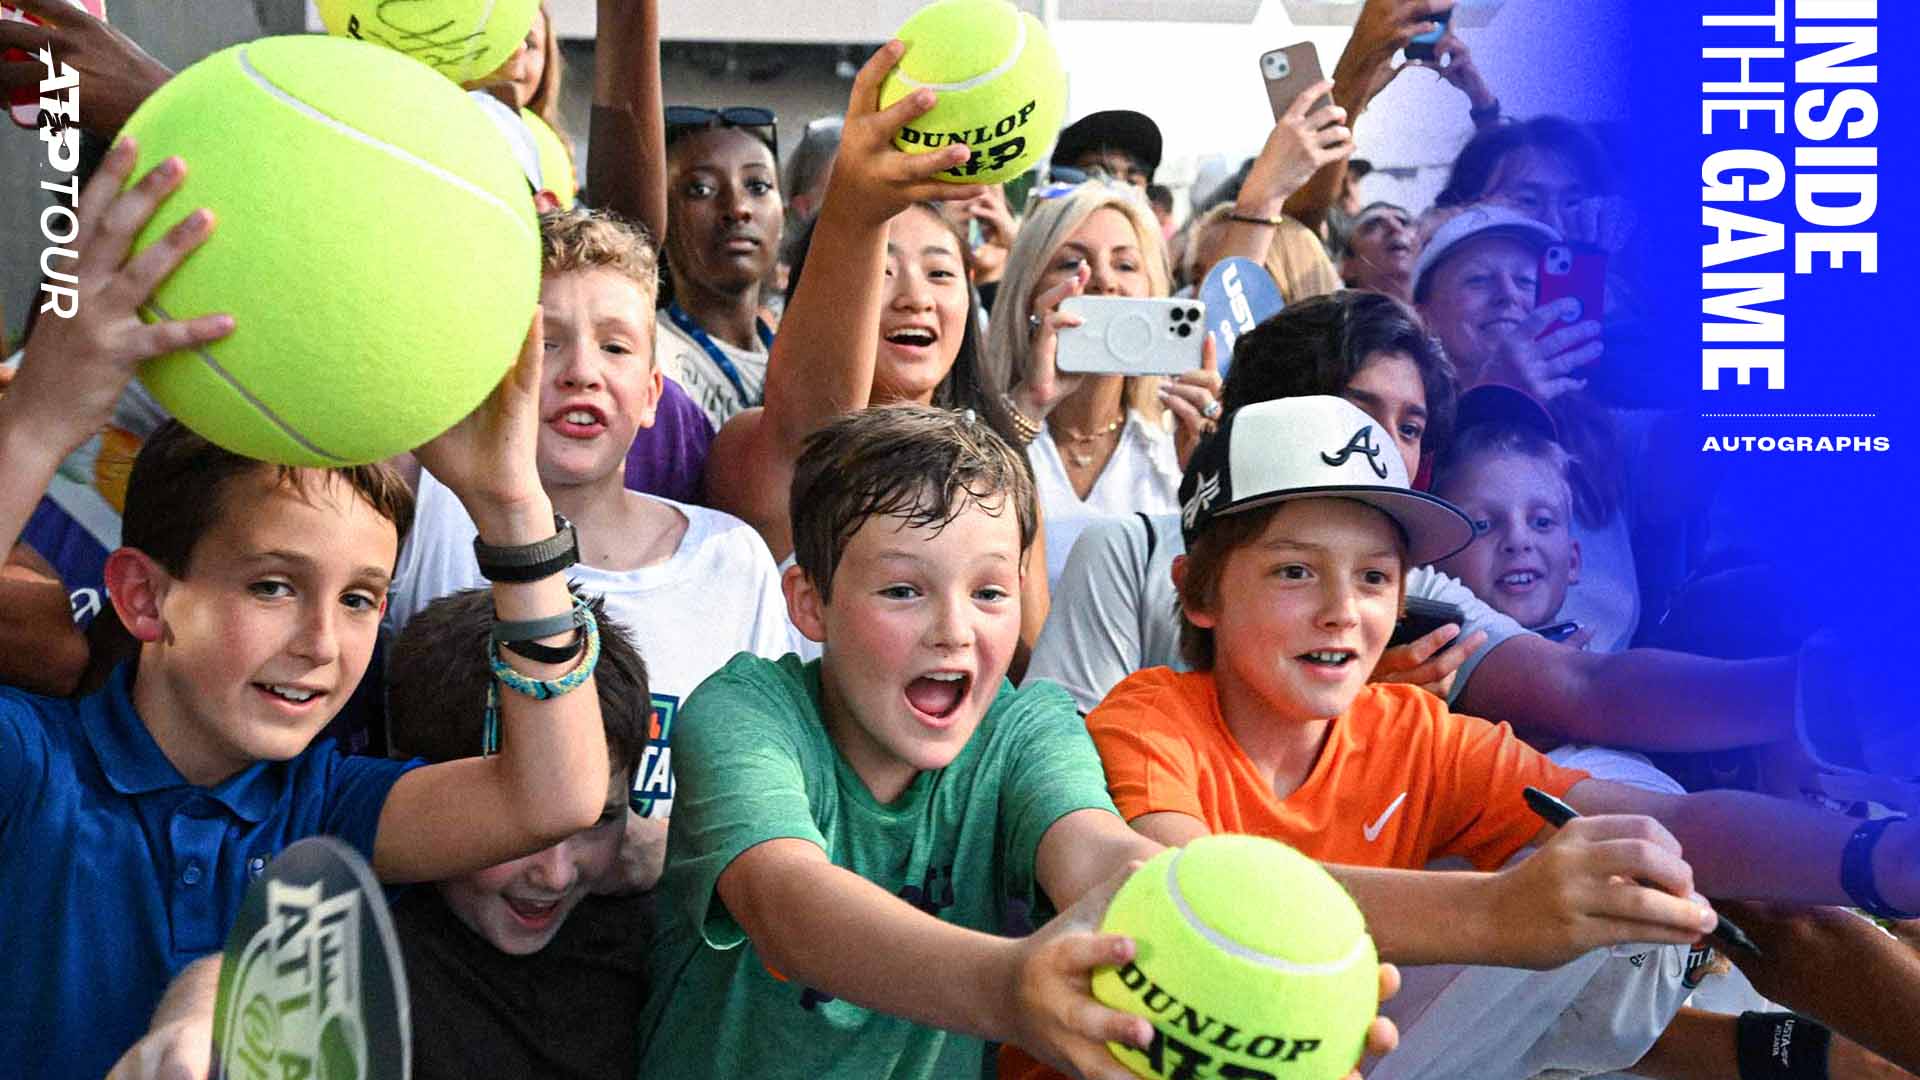 Inside The Game: Signatures & Selfies, ATP Tour